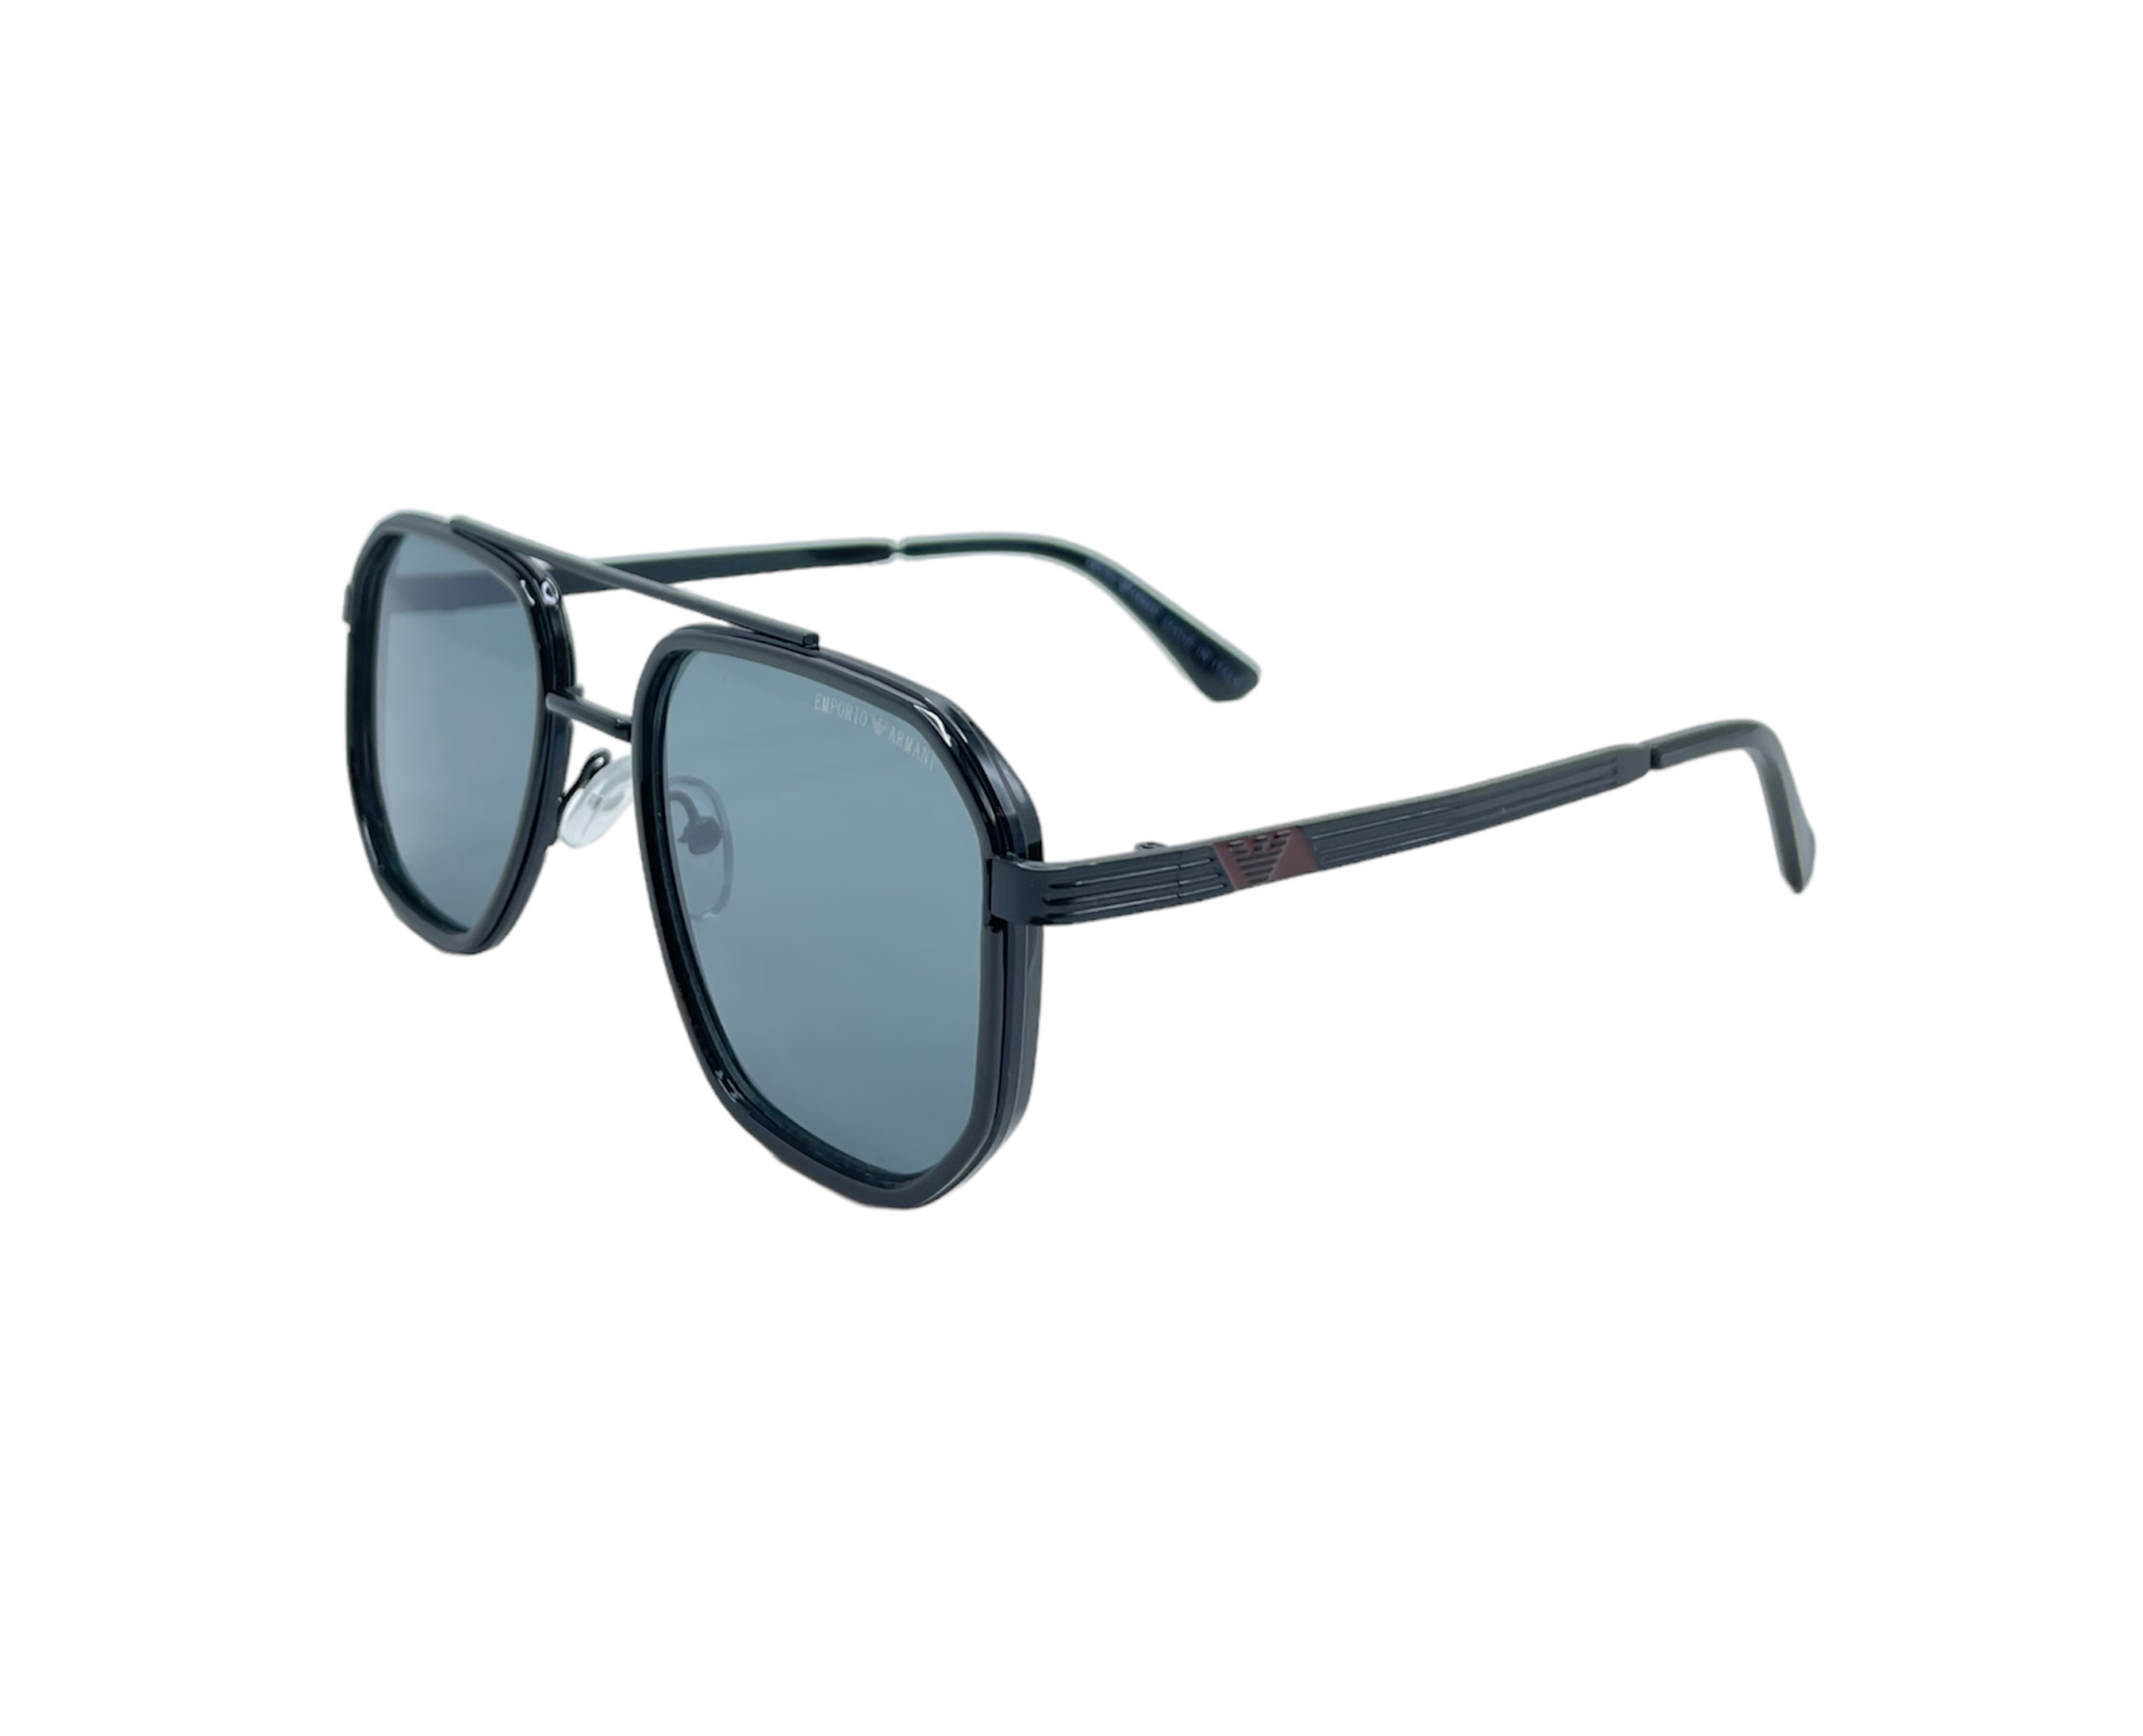 NS Deluxe - 247 - Black - Sunglasses